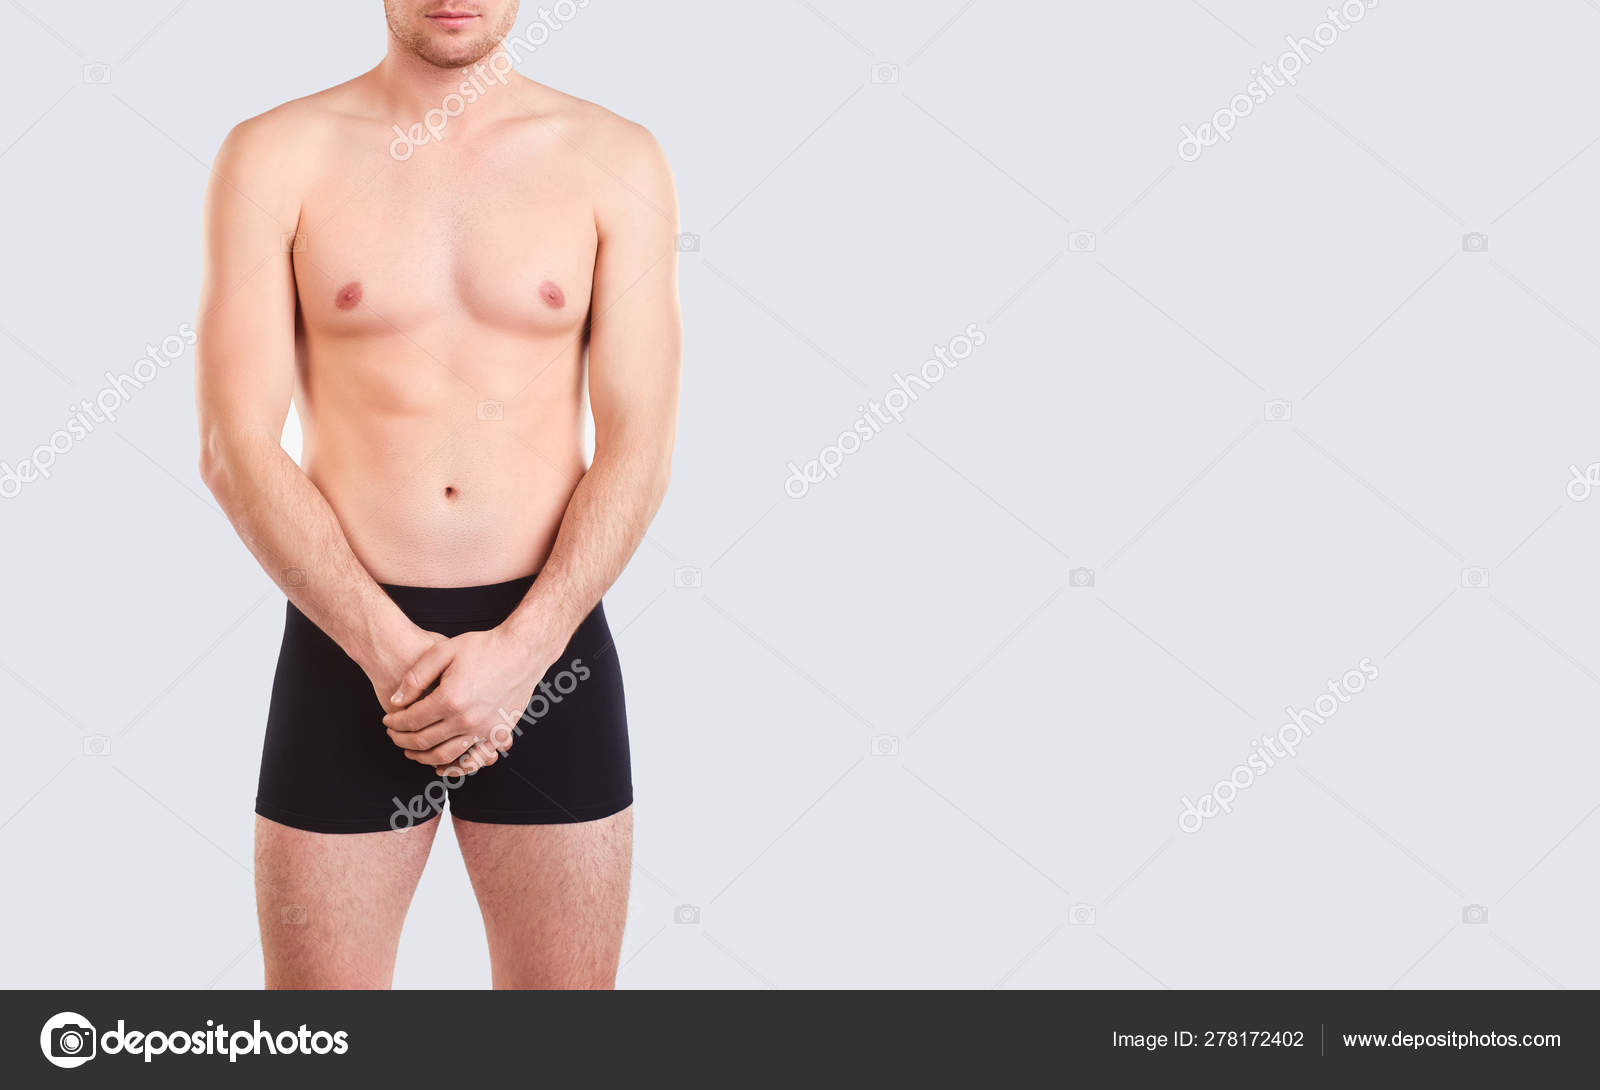 Hand holding man underwear or underpants for men Stock Photo by  ©BonNontawat 159111864